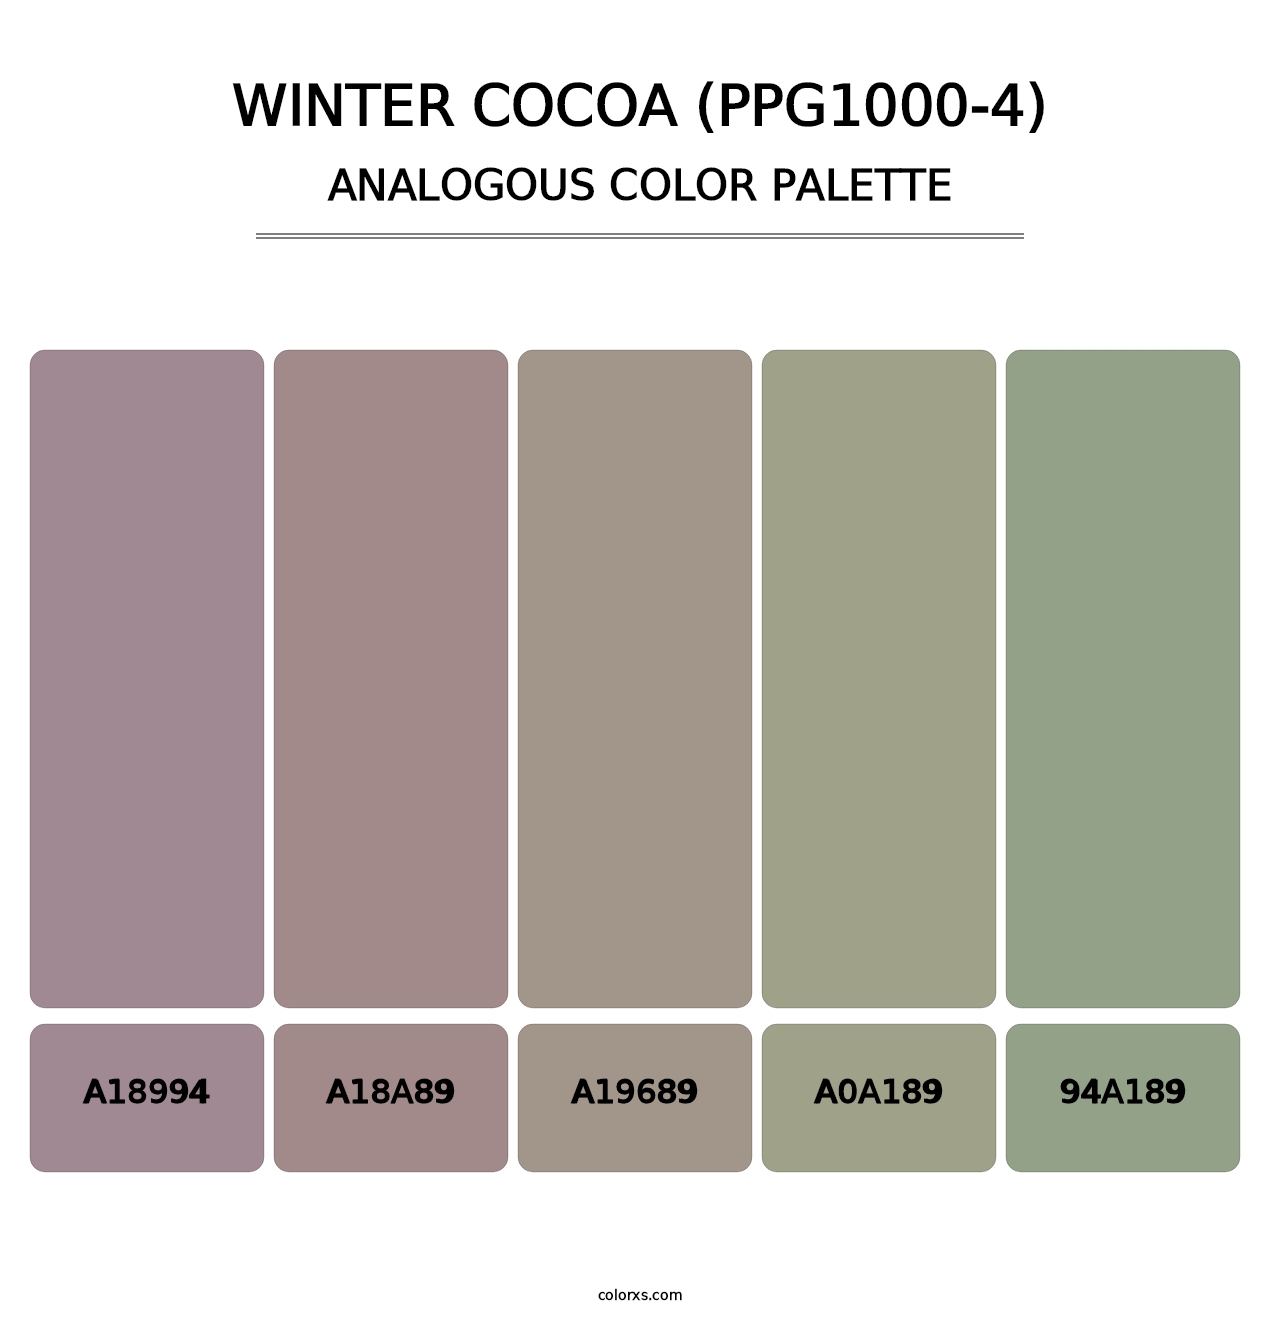 Winter Cocoa (PPG1000-4) - Analogous Color Palette